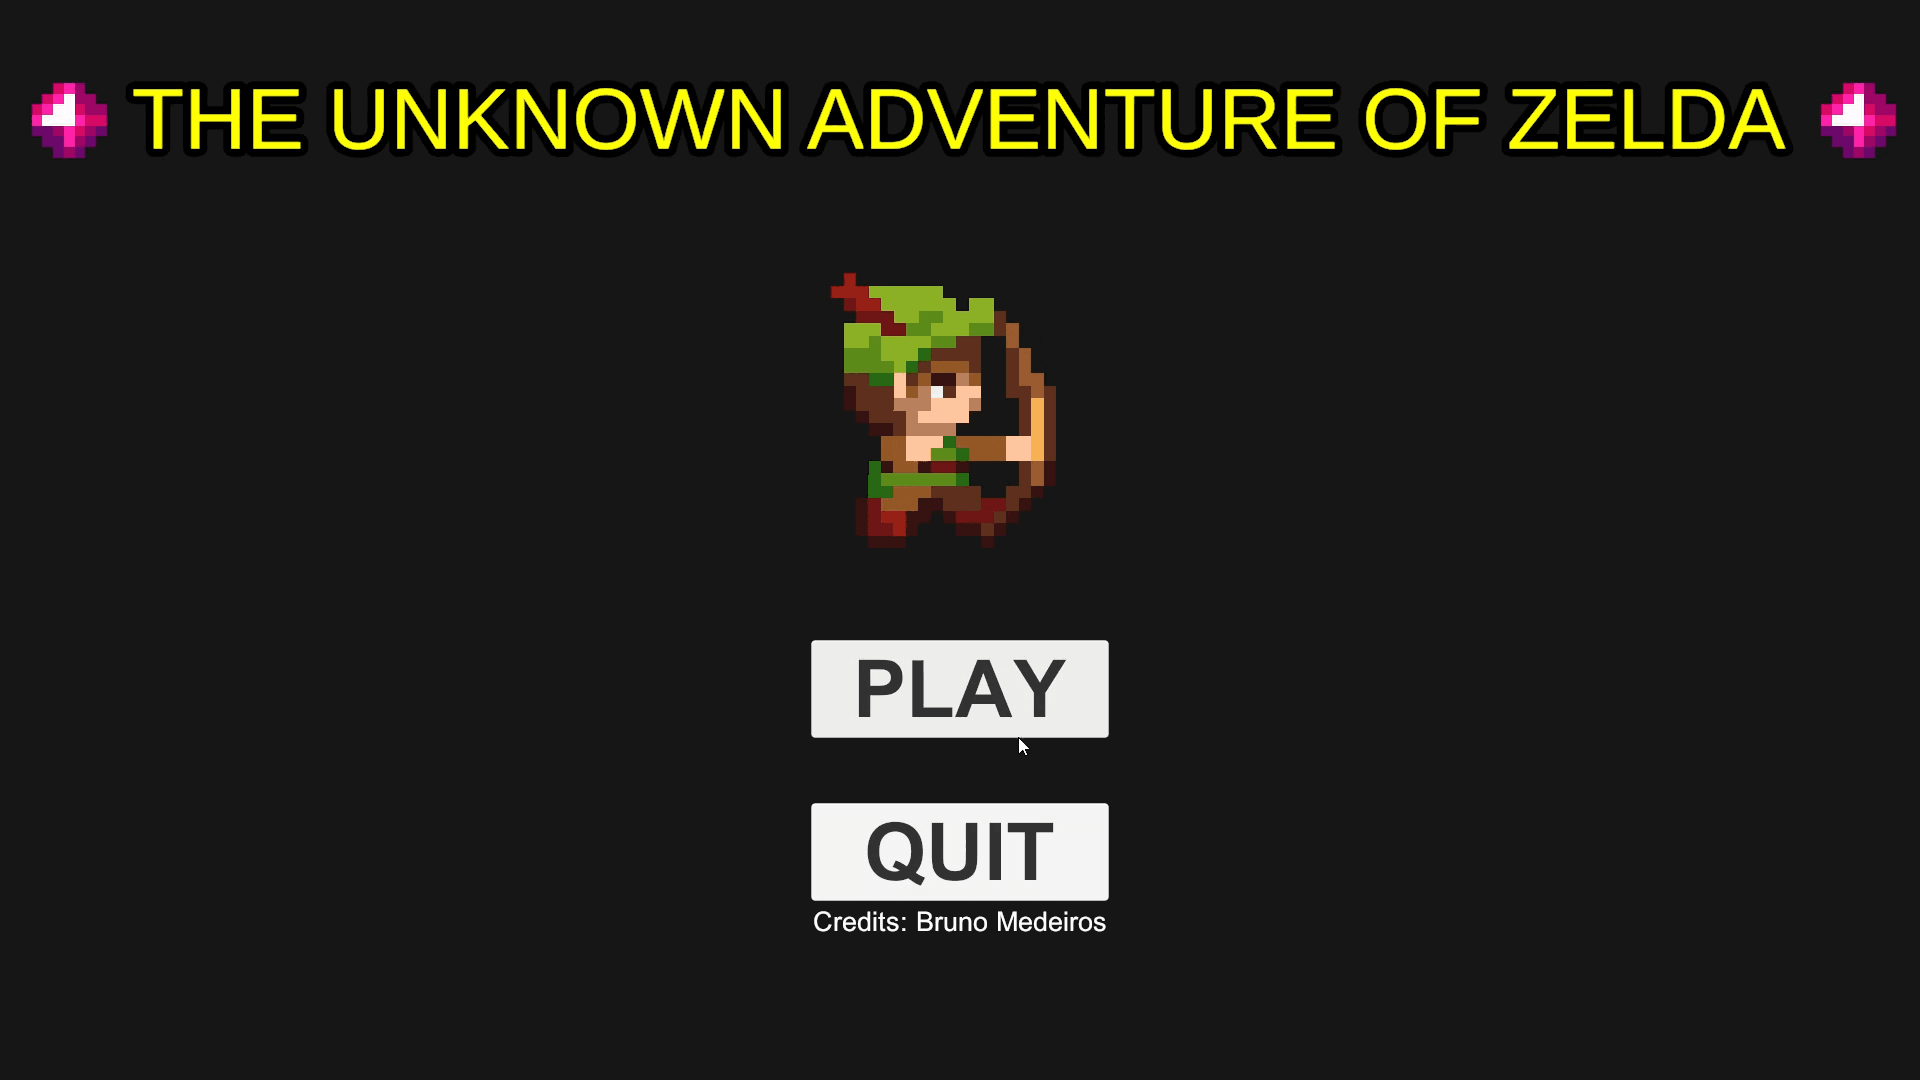 The Unknown Adventure of Zelda